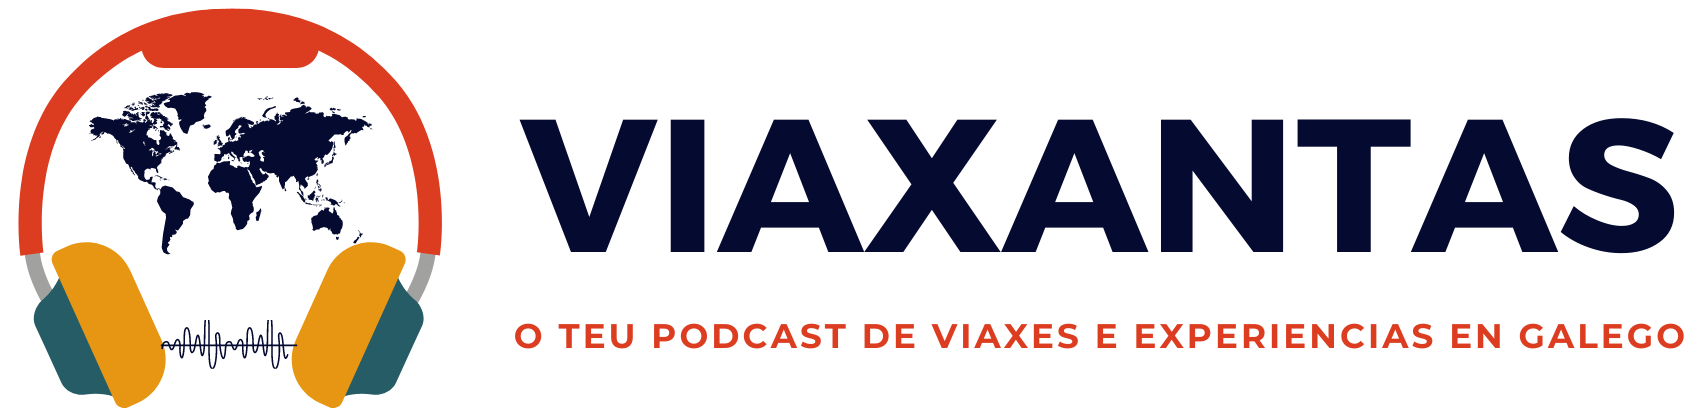 Viaxantas Podcast